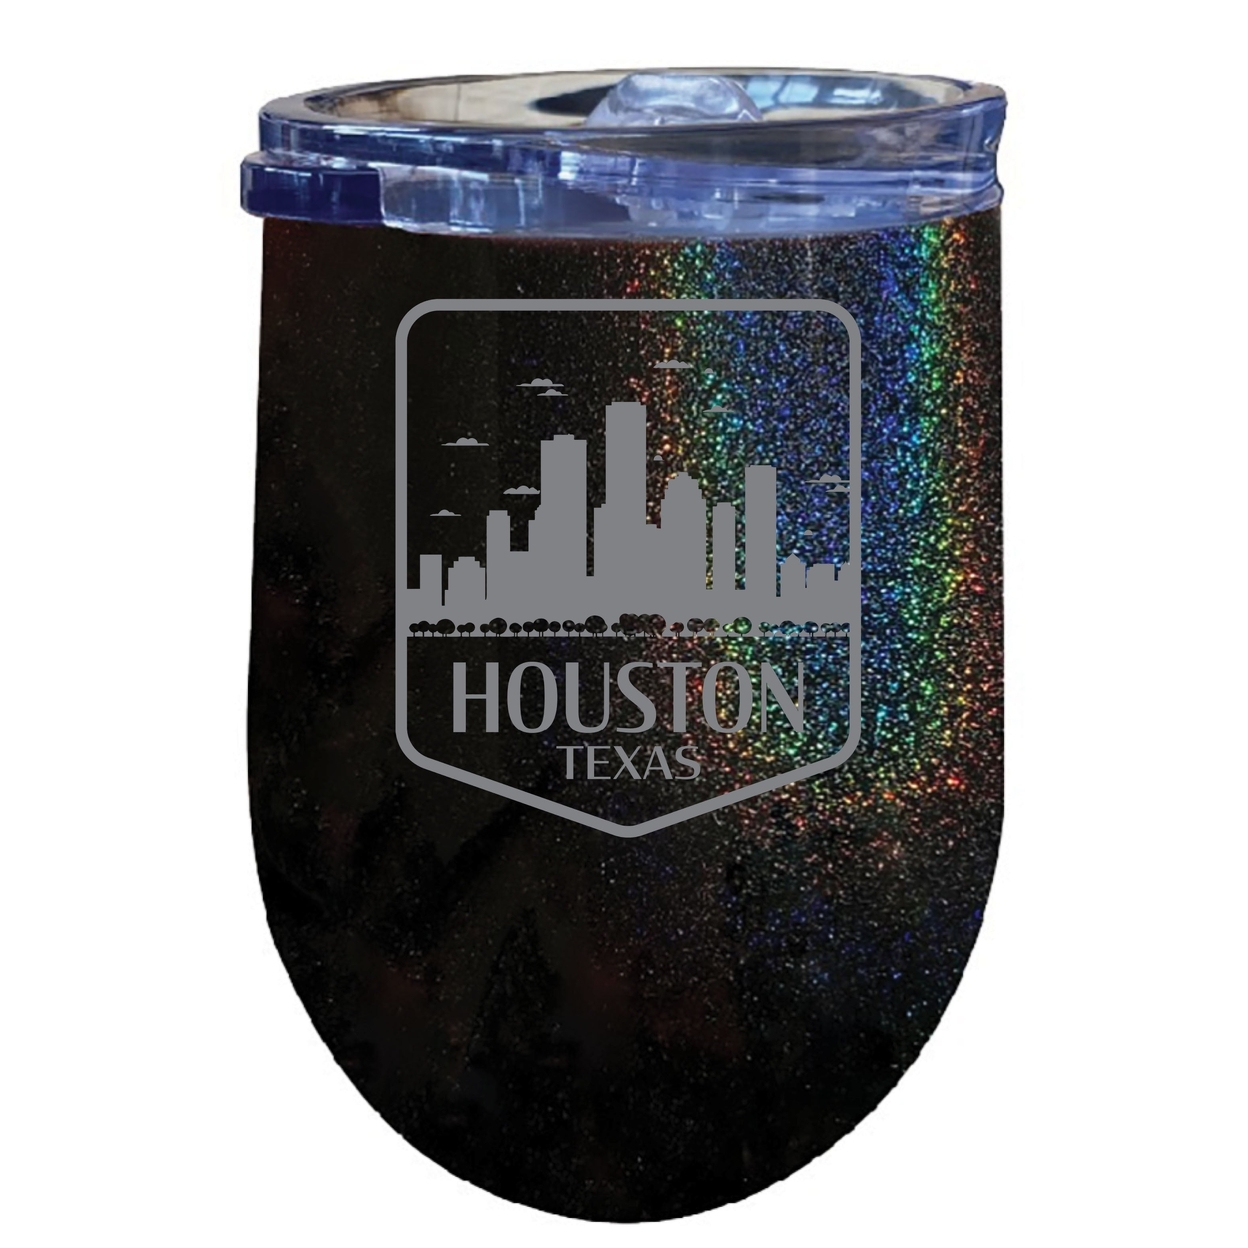 Houston Texas Souvenir 12 Oz Engraved Insulated Wine Stainless Steel Tumbler - Rainbow Glitter Gray,,2-Pack